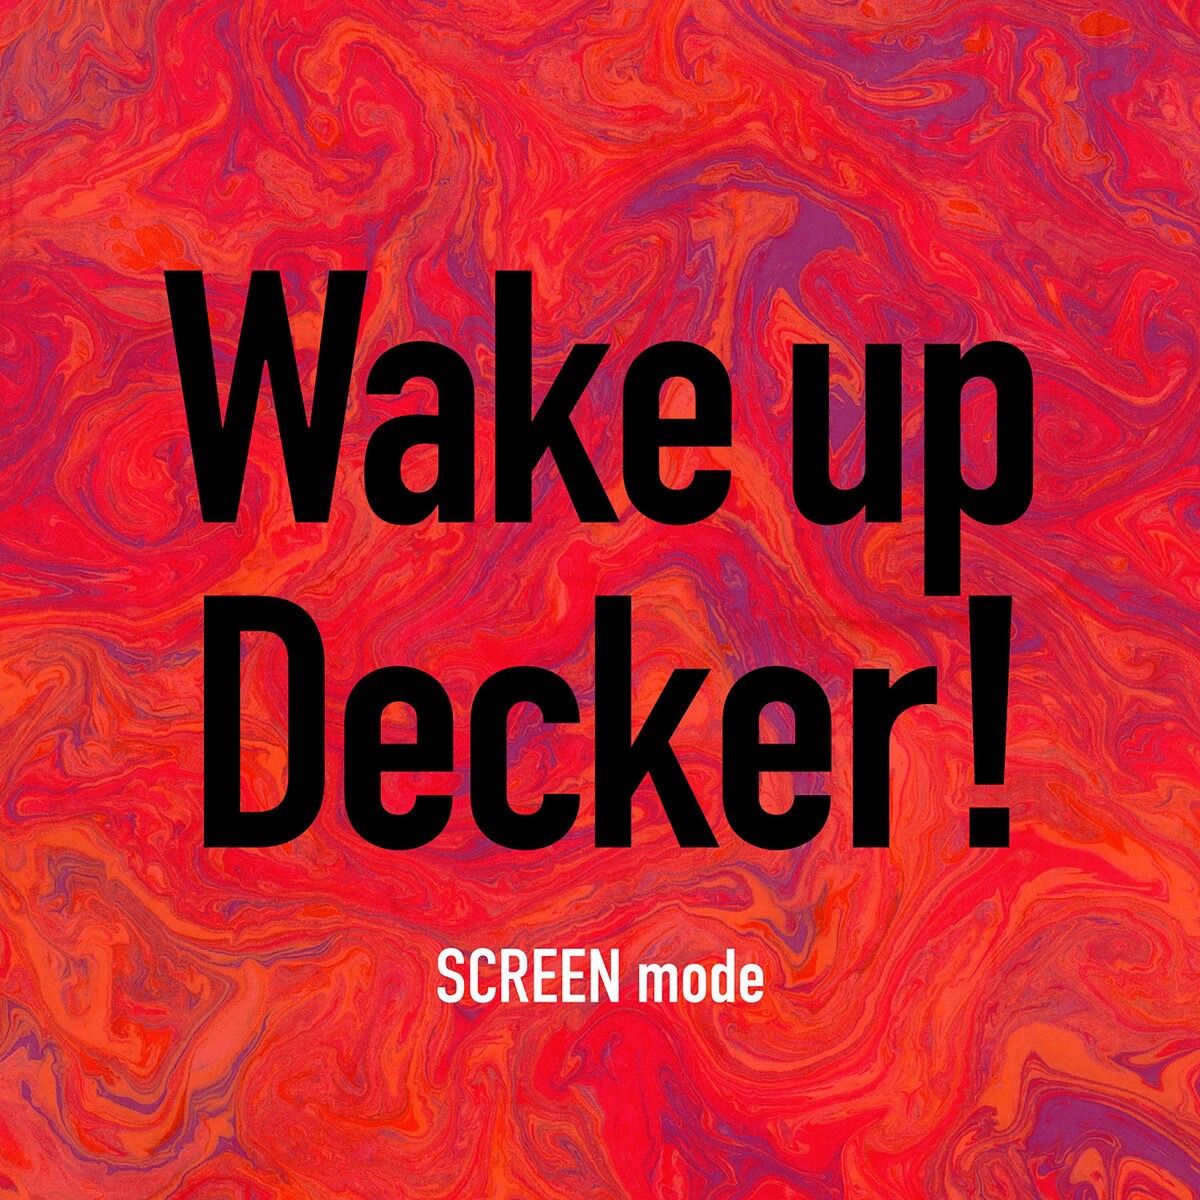 Wake up Decker 專輯封面.jpeg